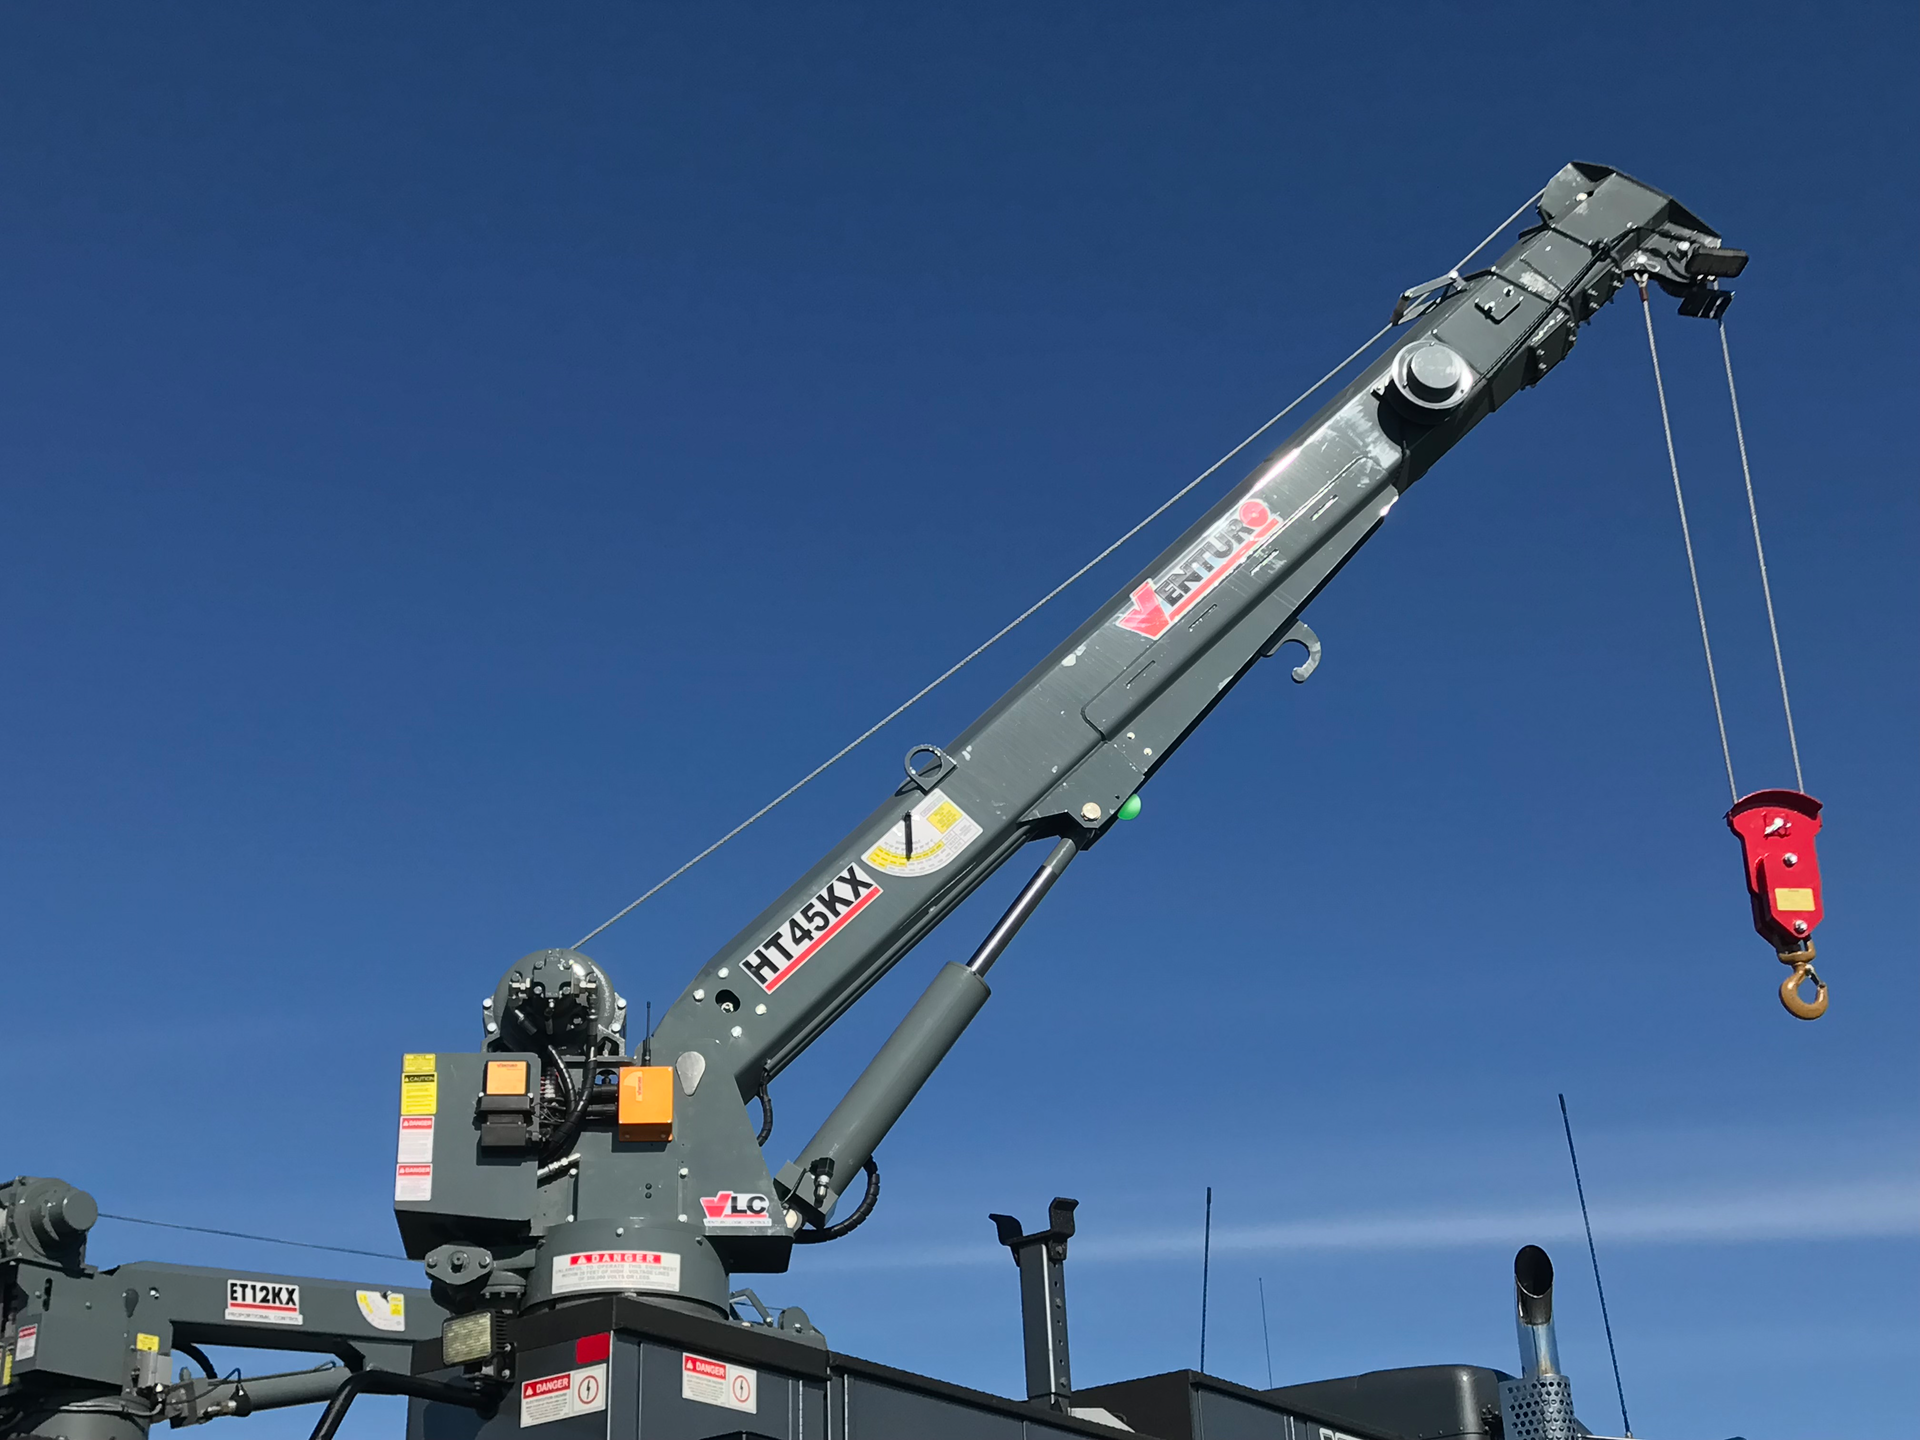 load testing tools for cranes